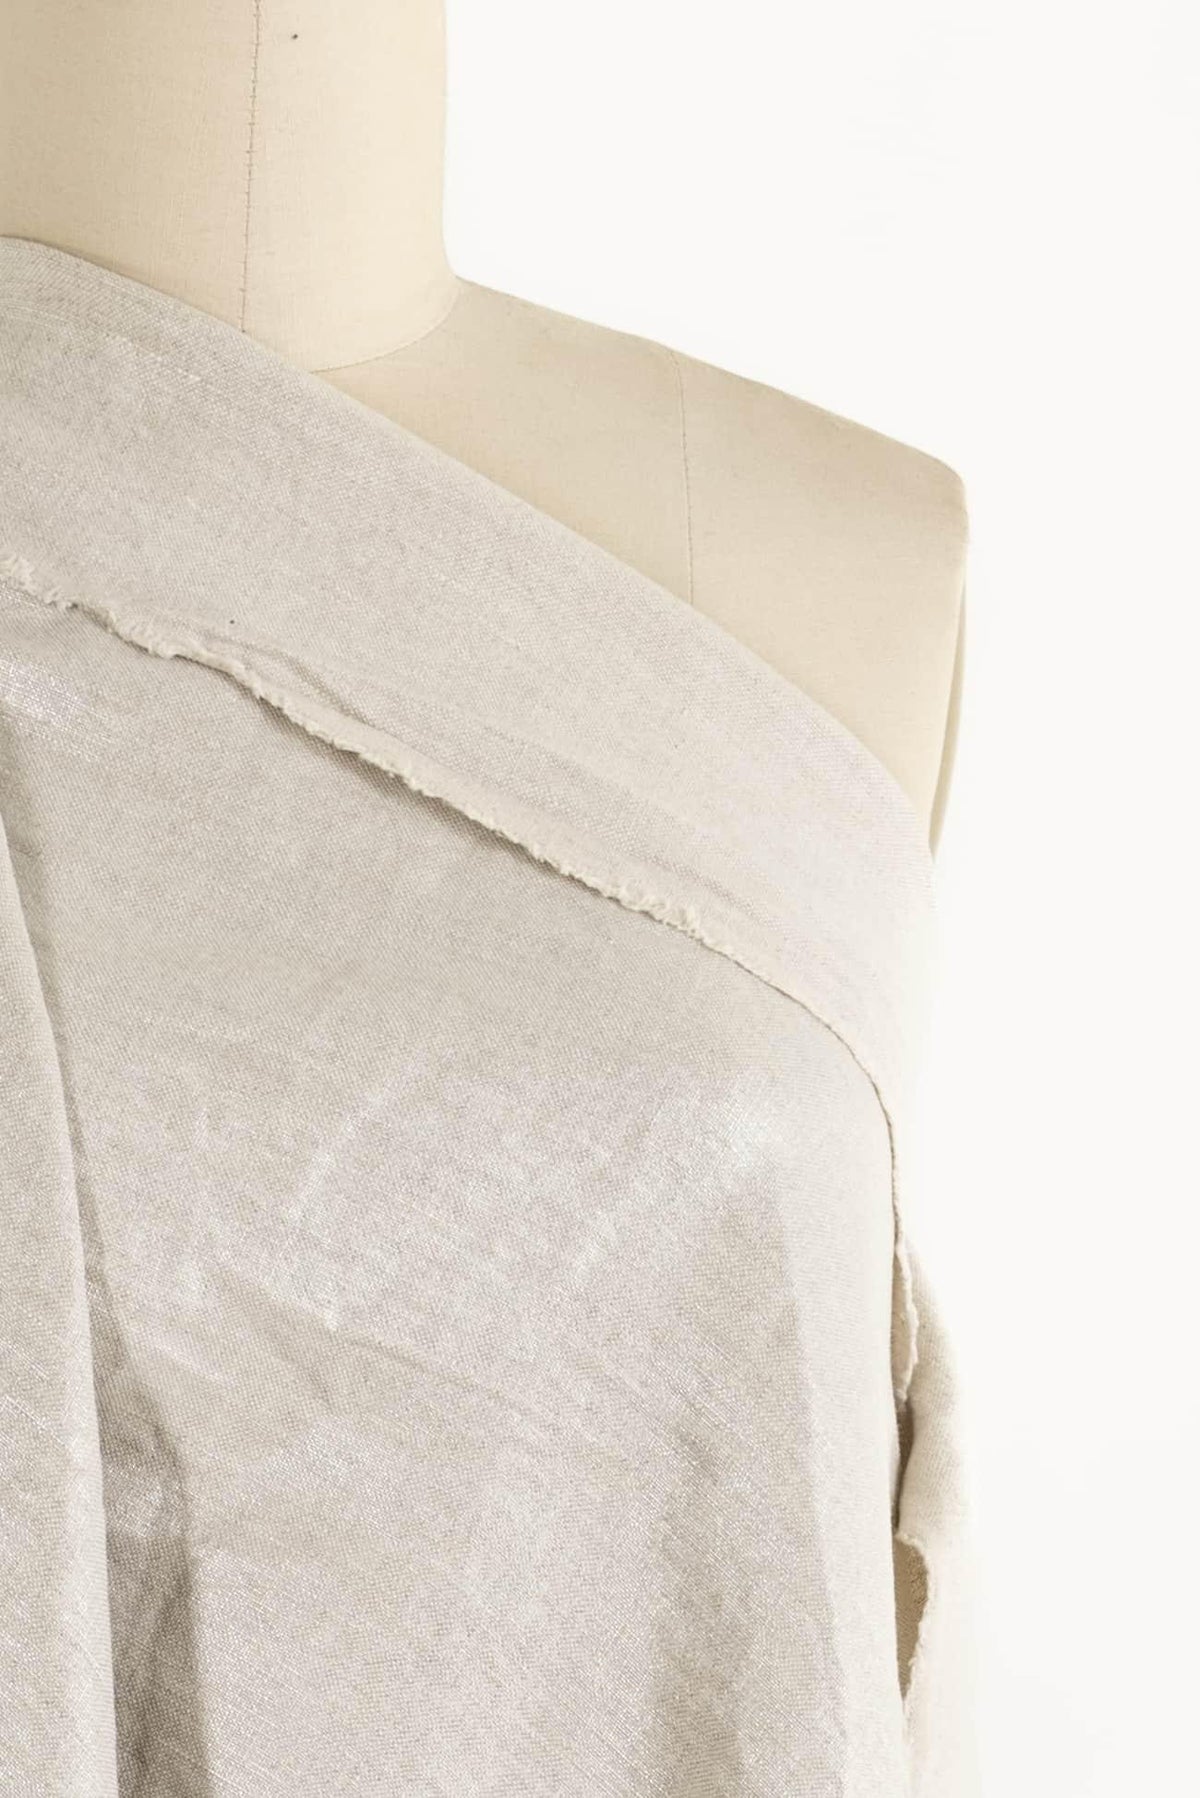 Shimmering Silver Linen/Cotton Woven - Marcy Tilton Fabrics